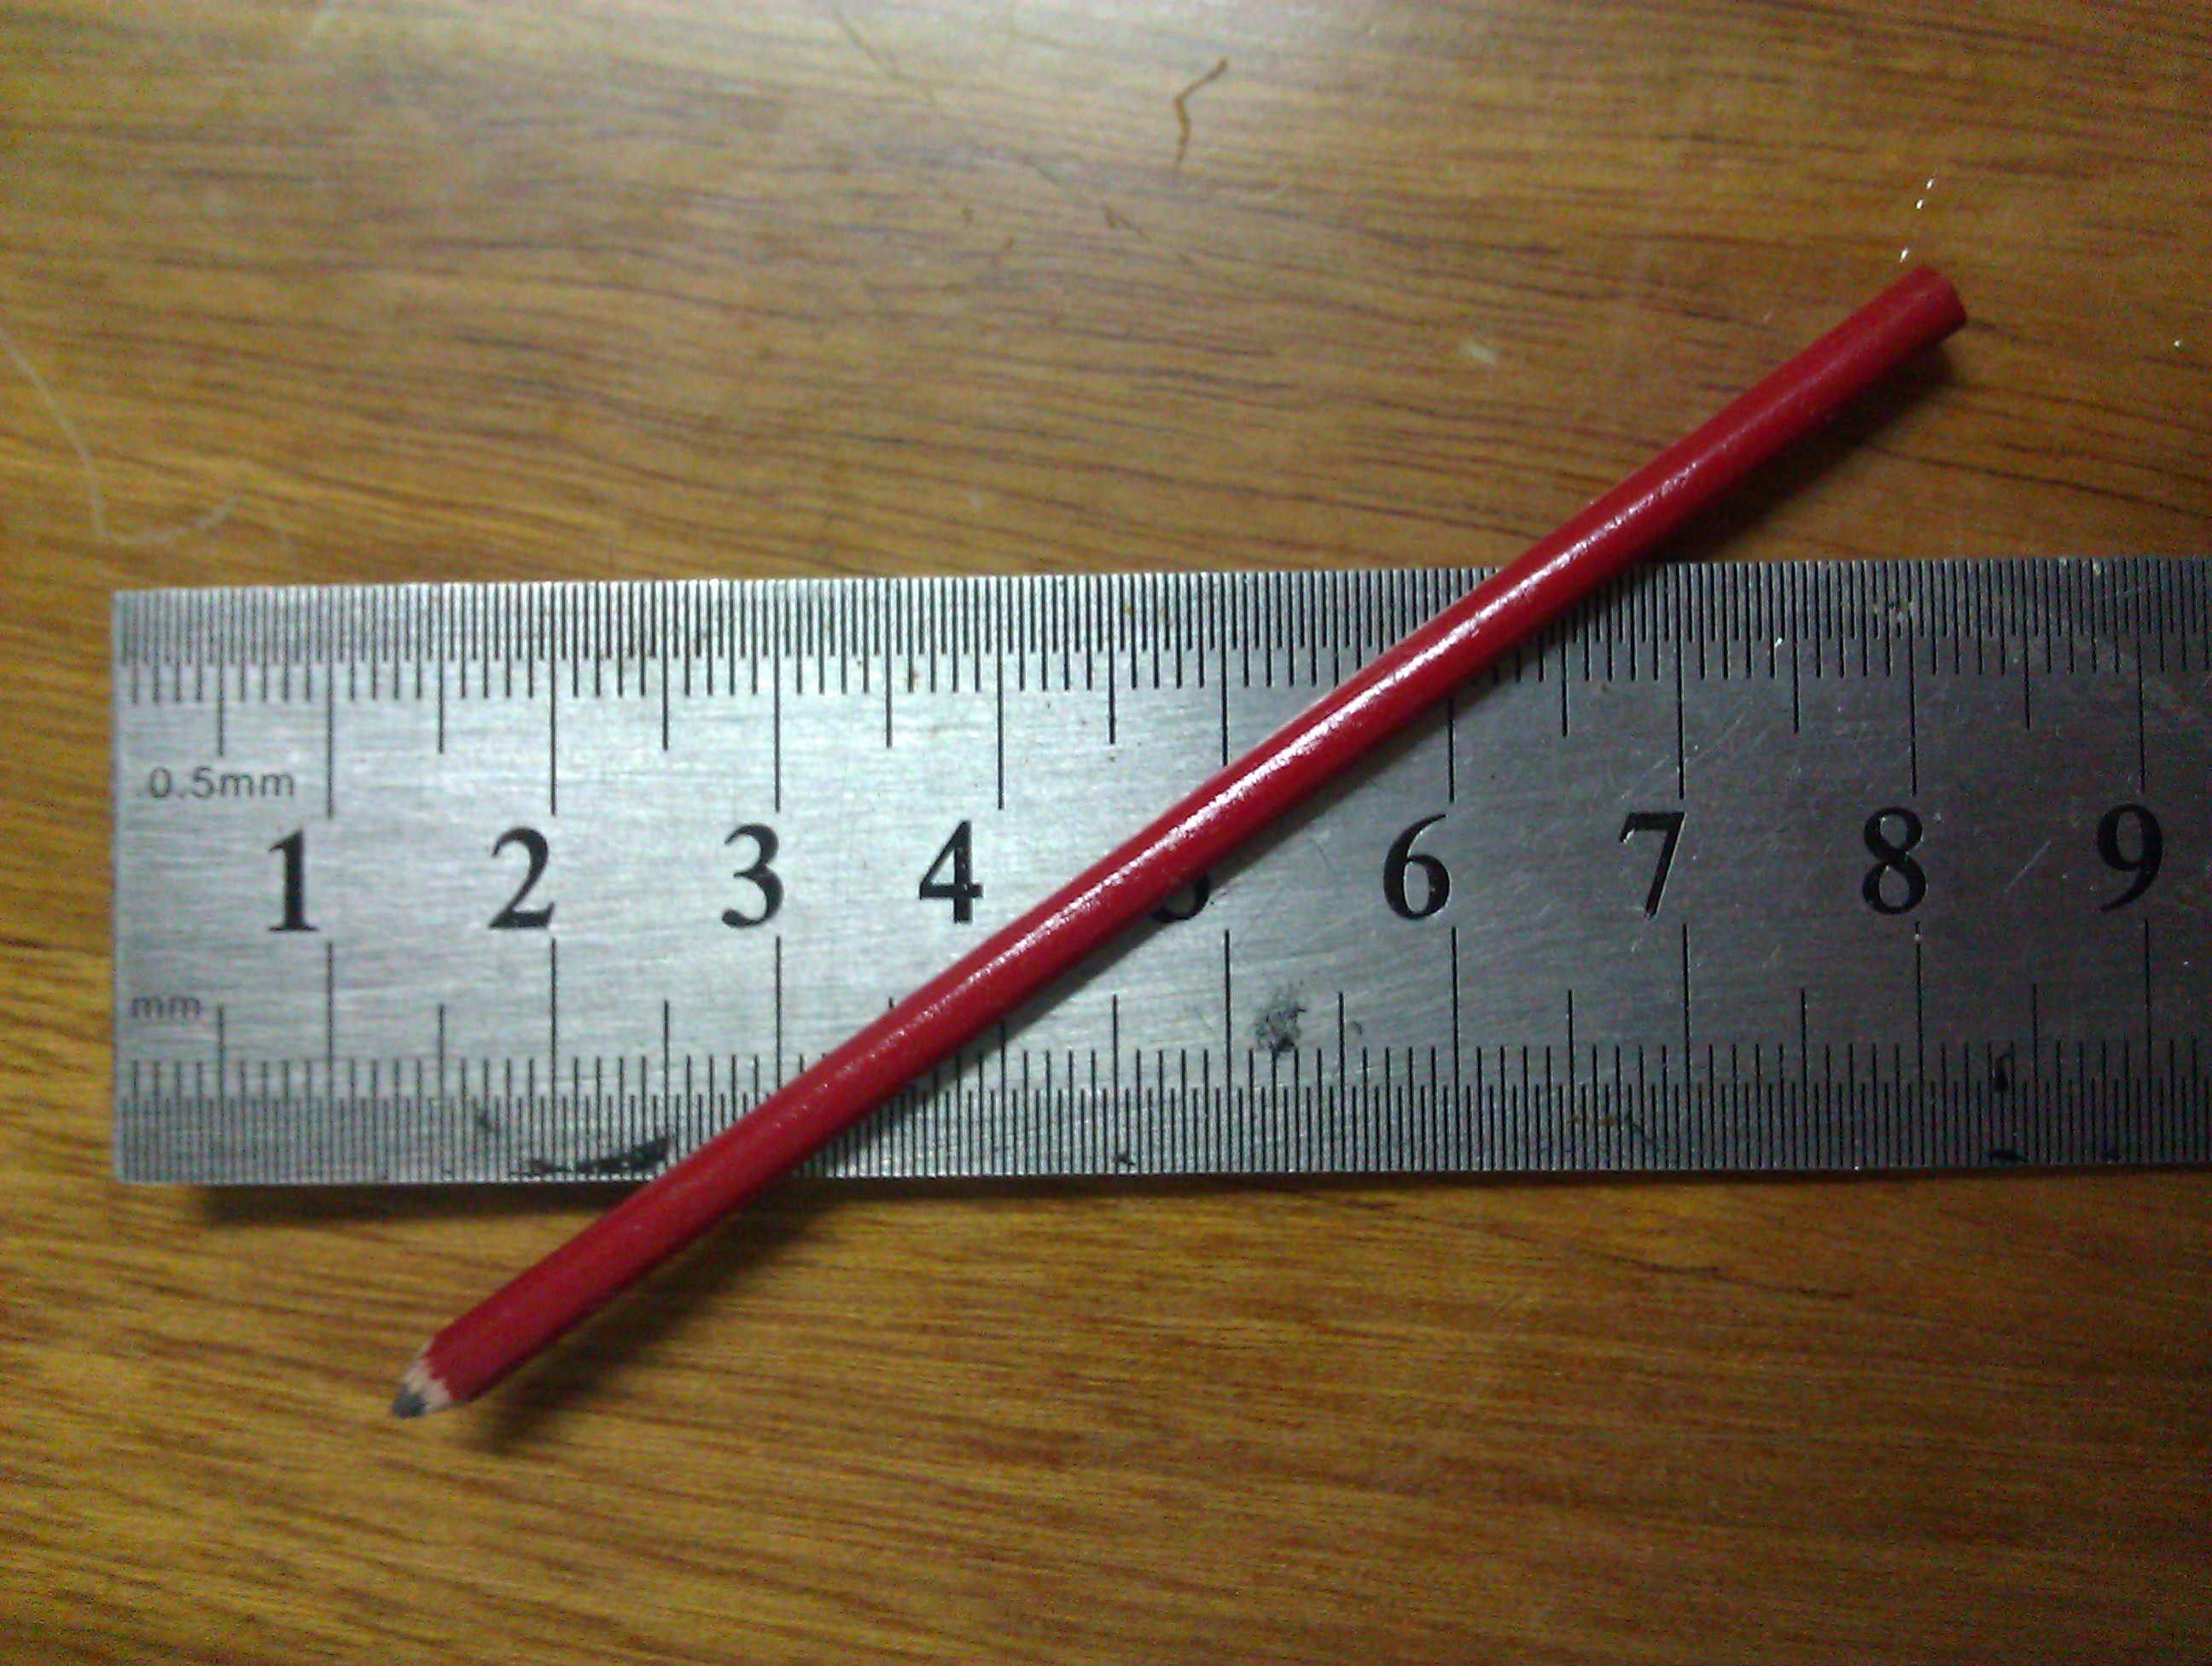 Mini pencil on ruler